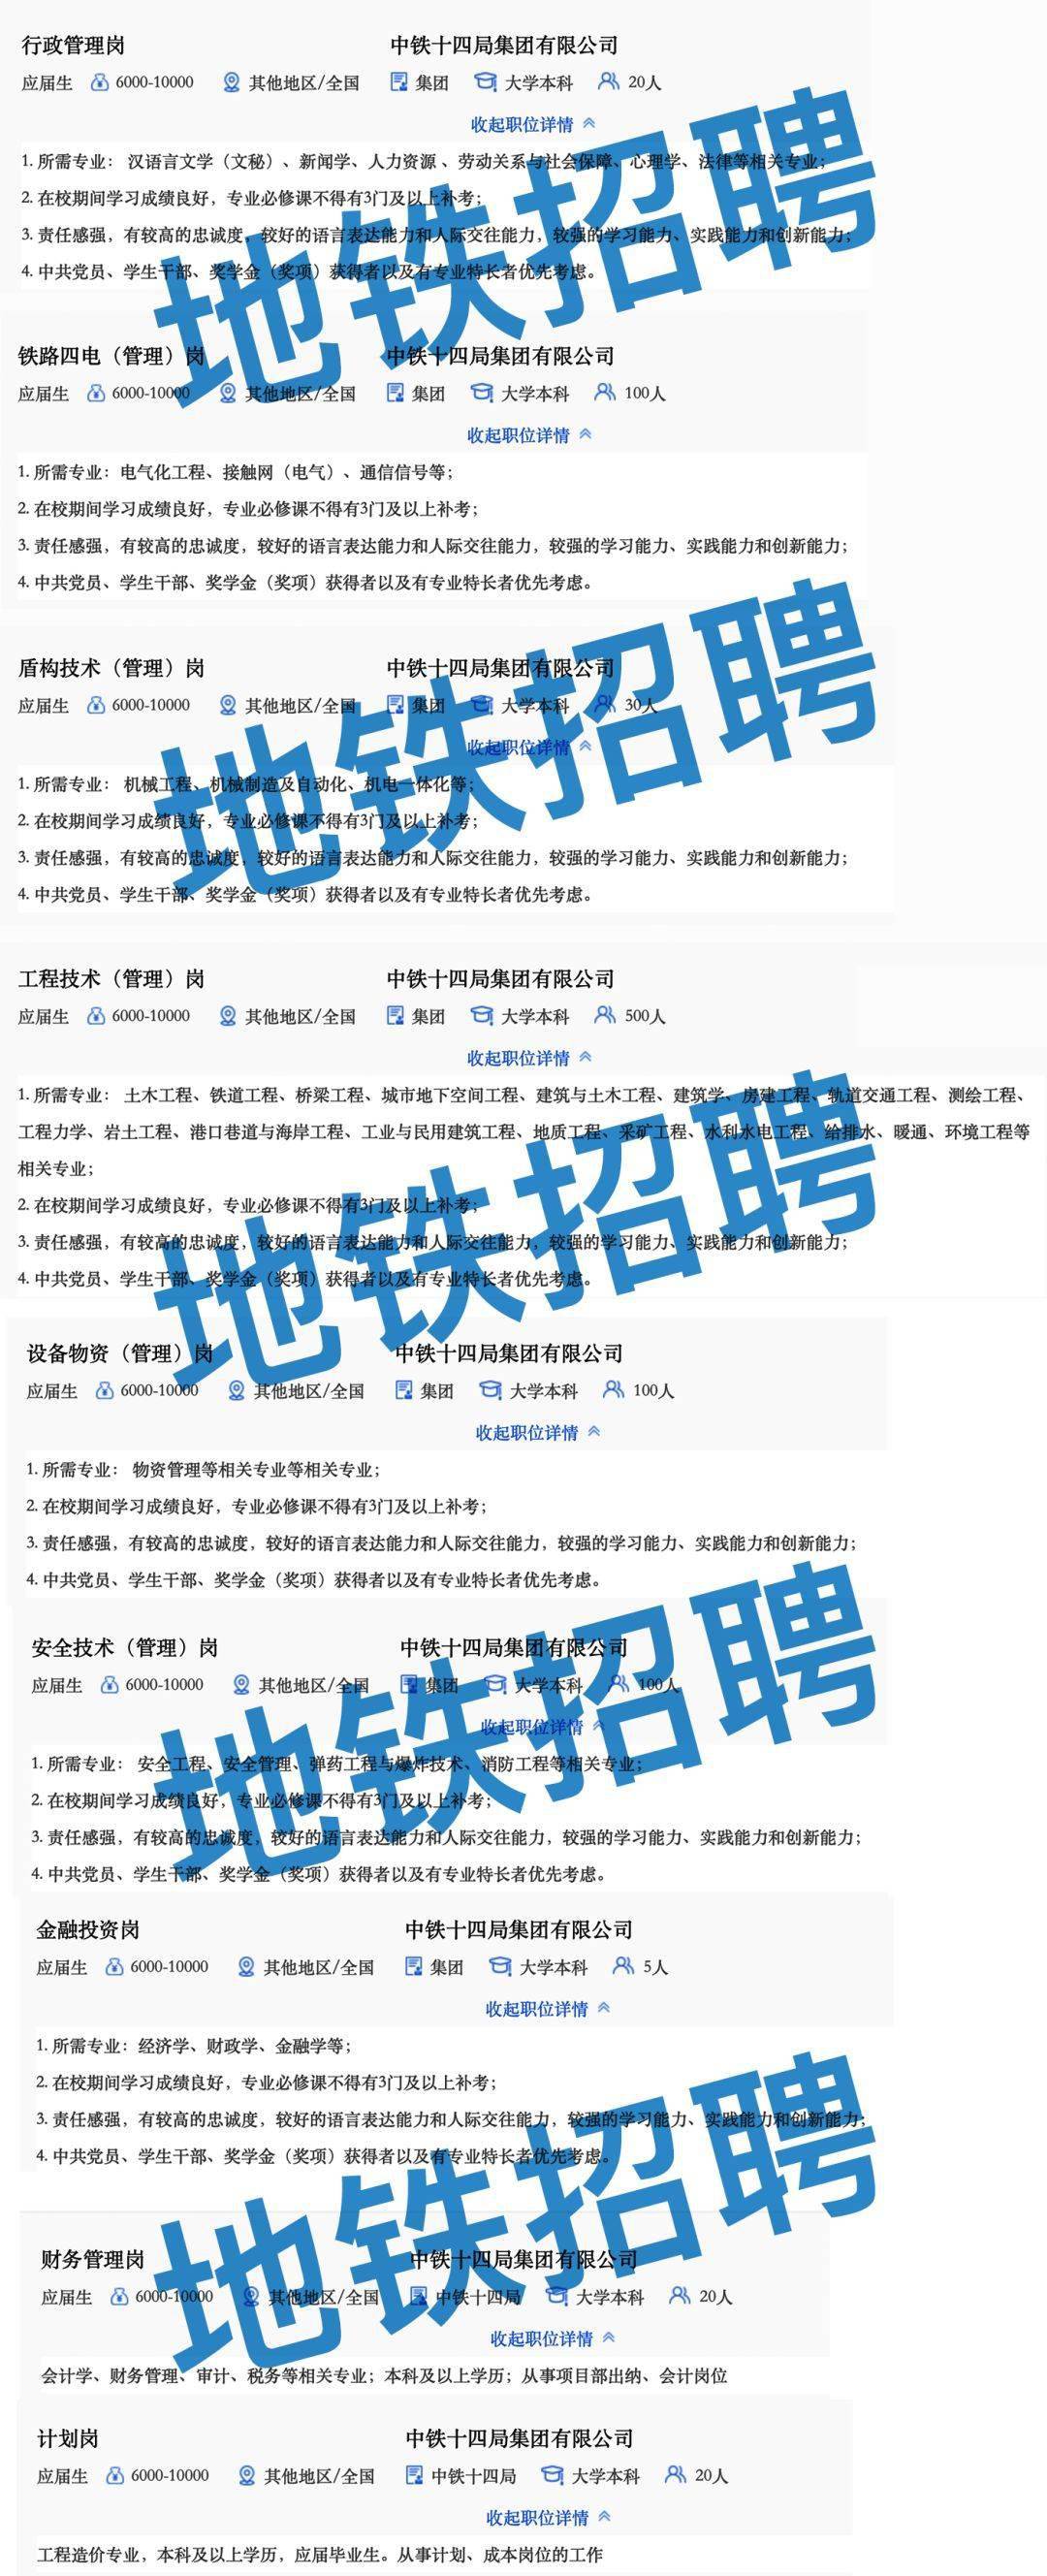 201BG大游9黑龙江国企招聘考试信息汇总(持续更新)(组图)